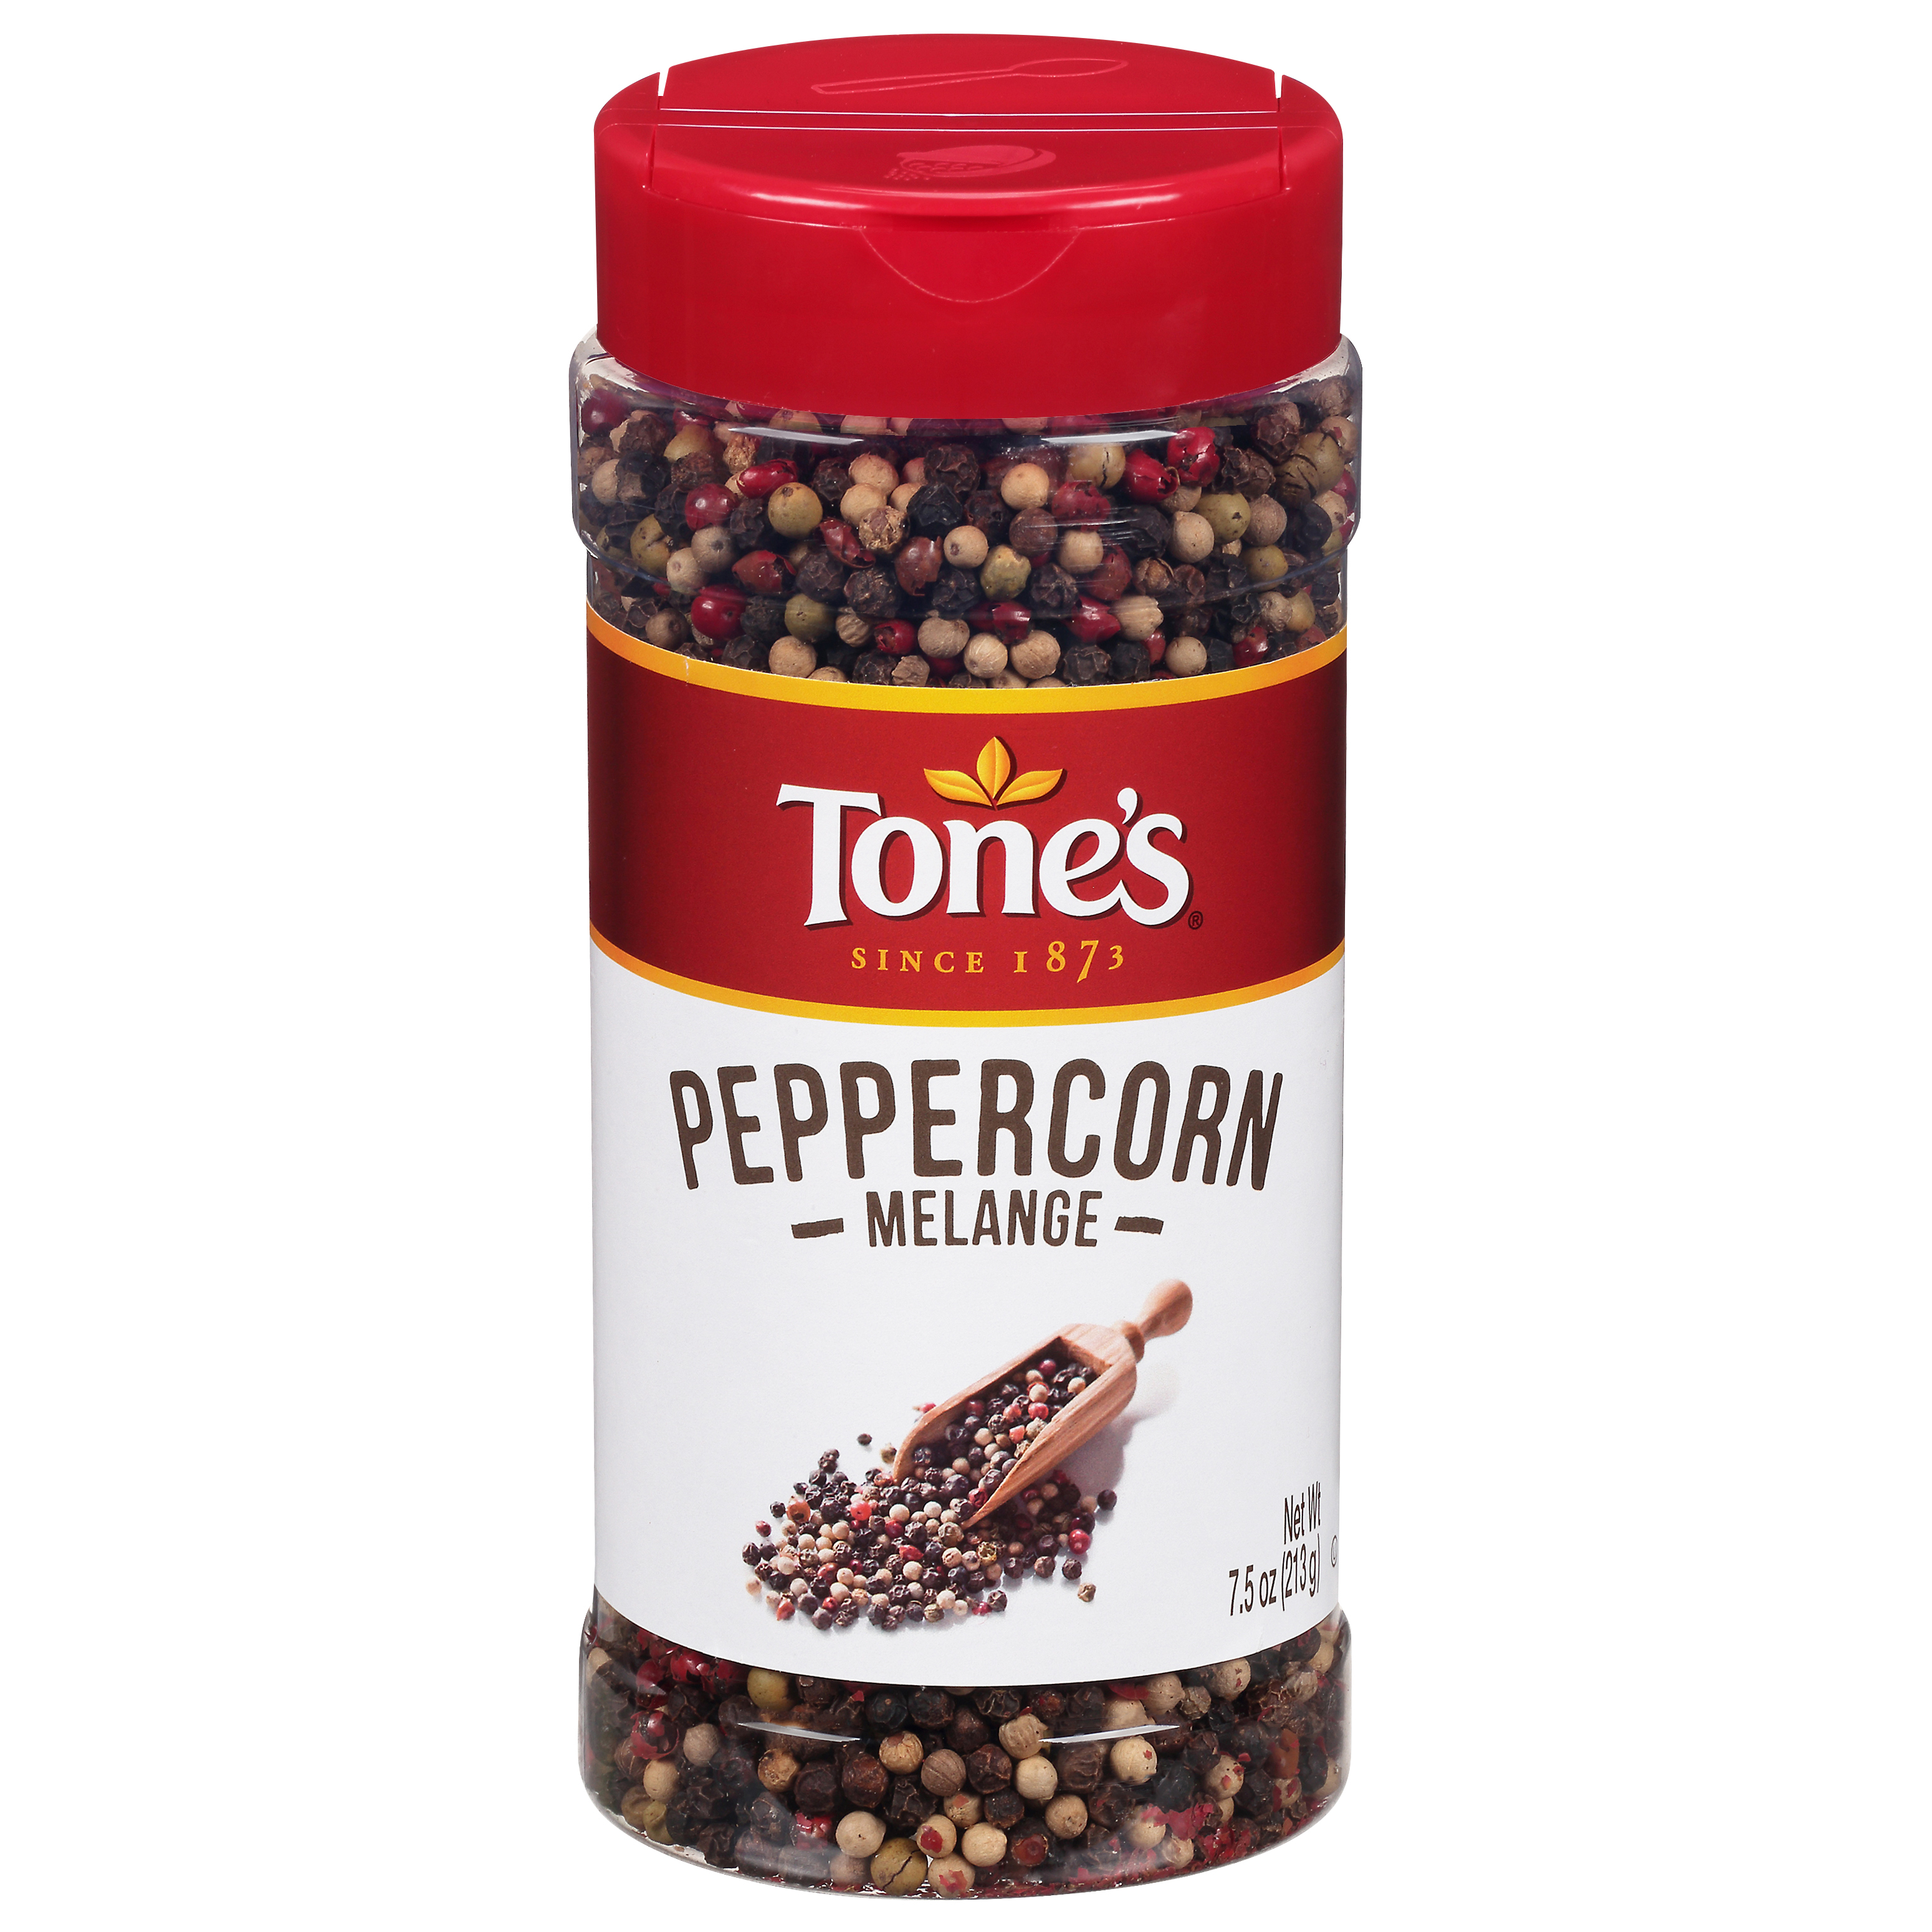 Tones Peppercorn Melange, 7.5 oz - image 1 of 9